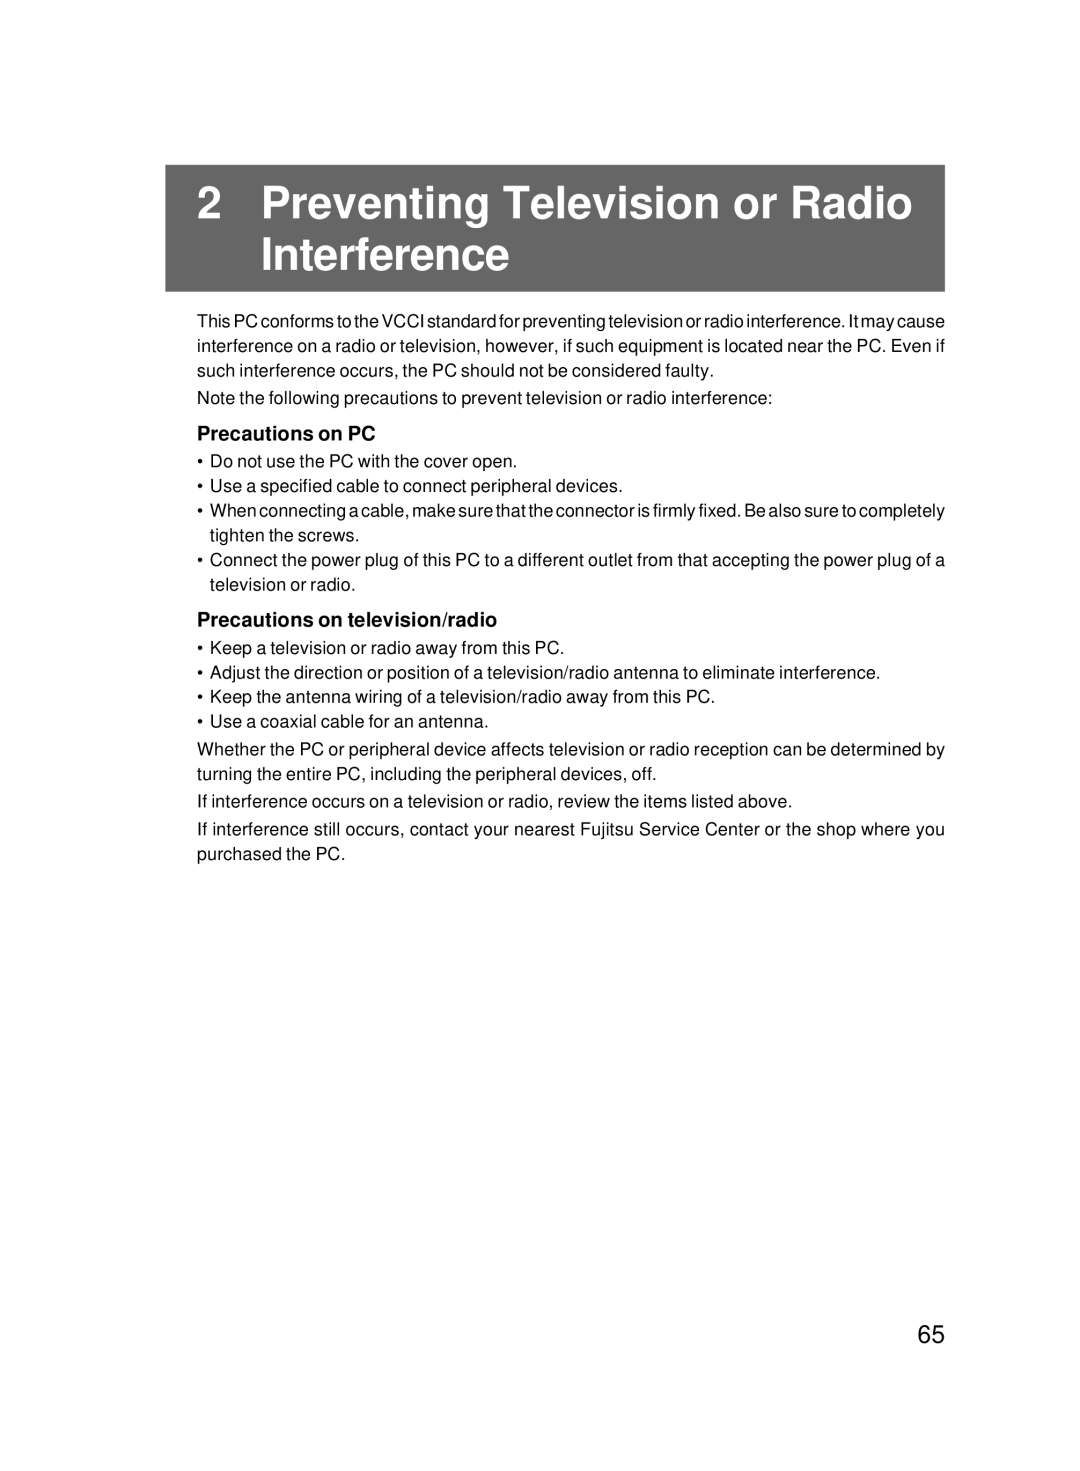 Fujitsu 8000 SERIES Preventing Television or Radio Interference, Precautions on PC, Precautions on television/radio 